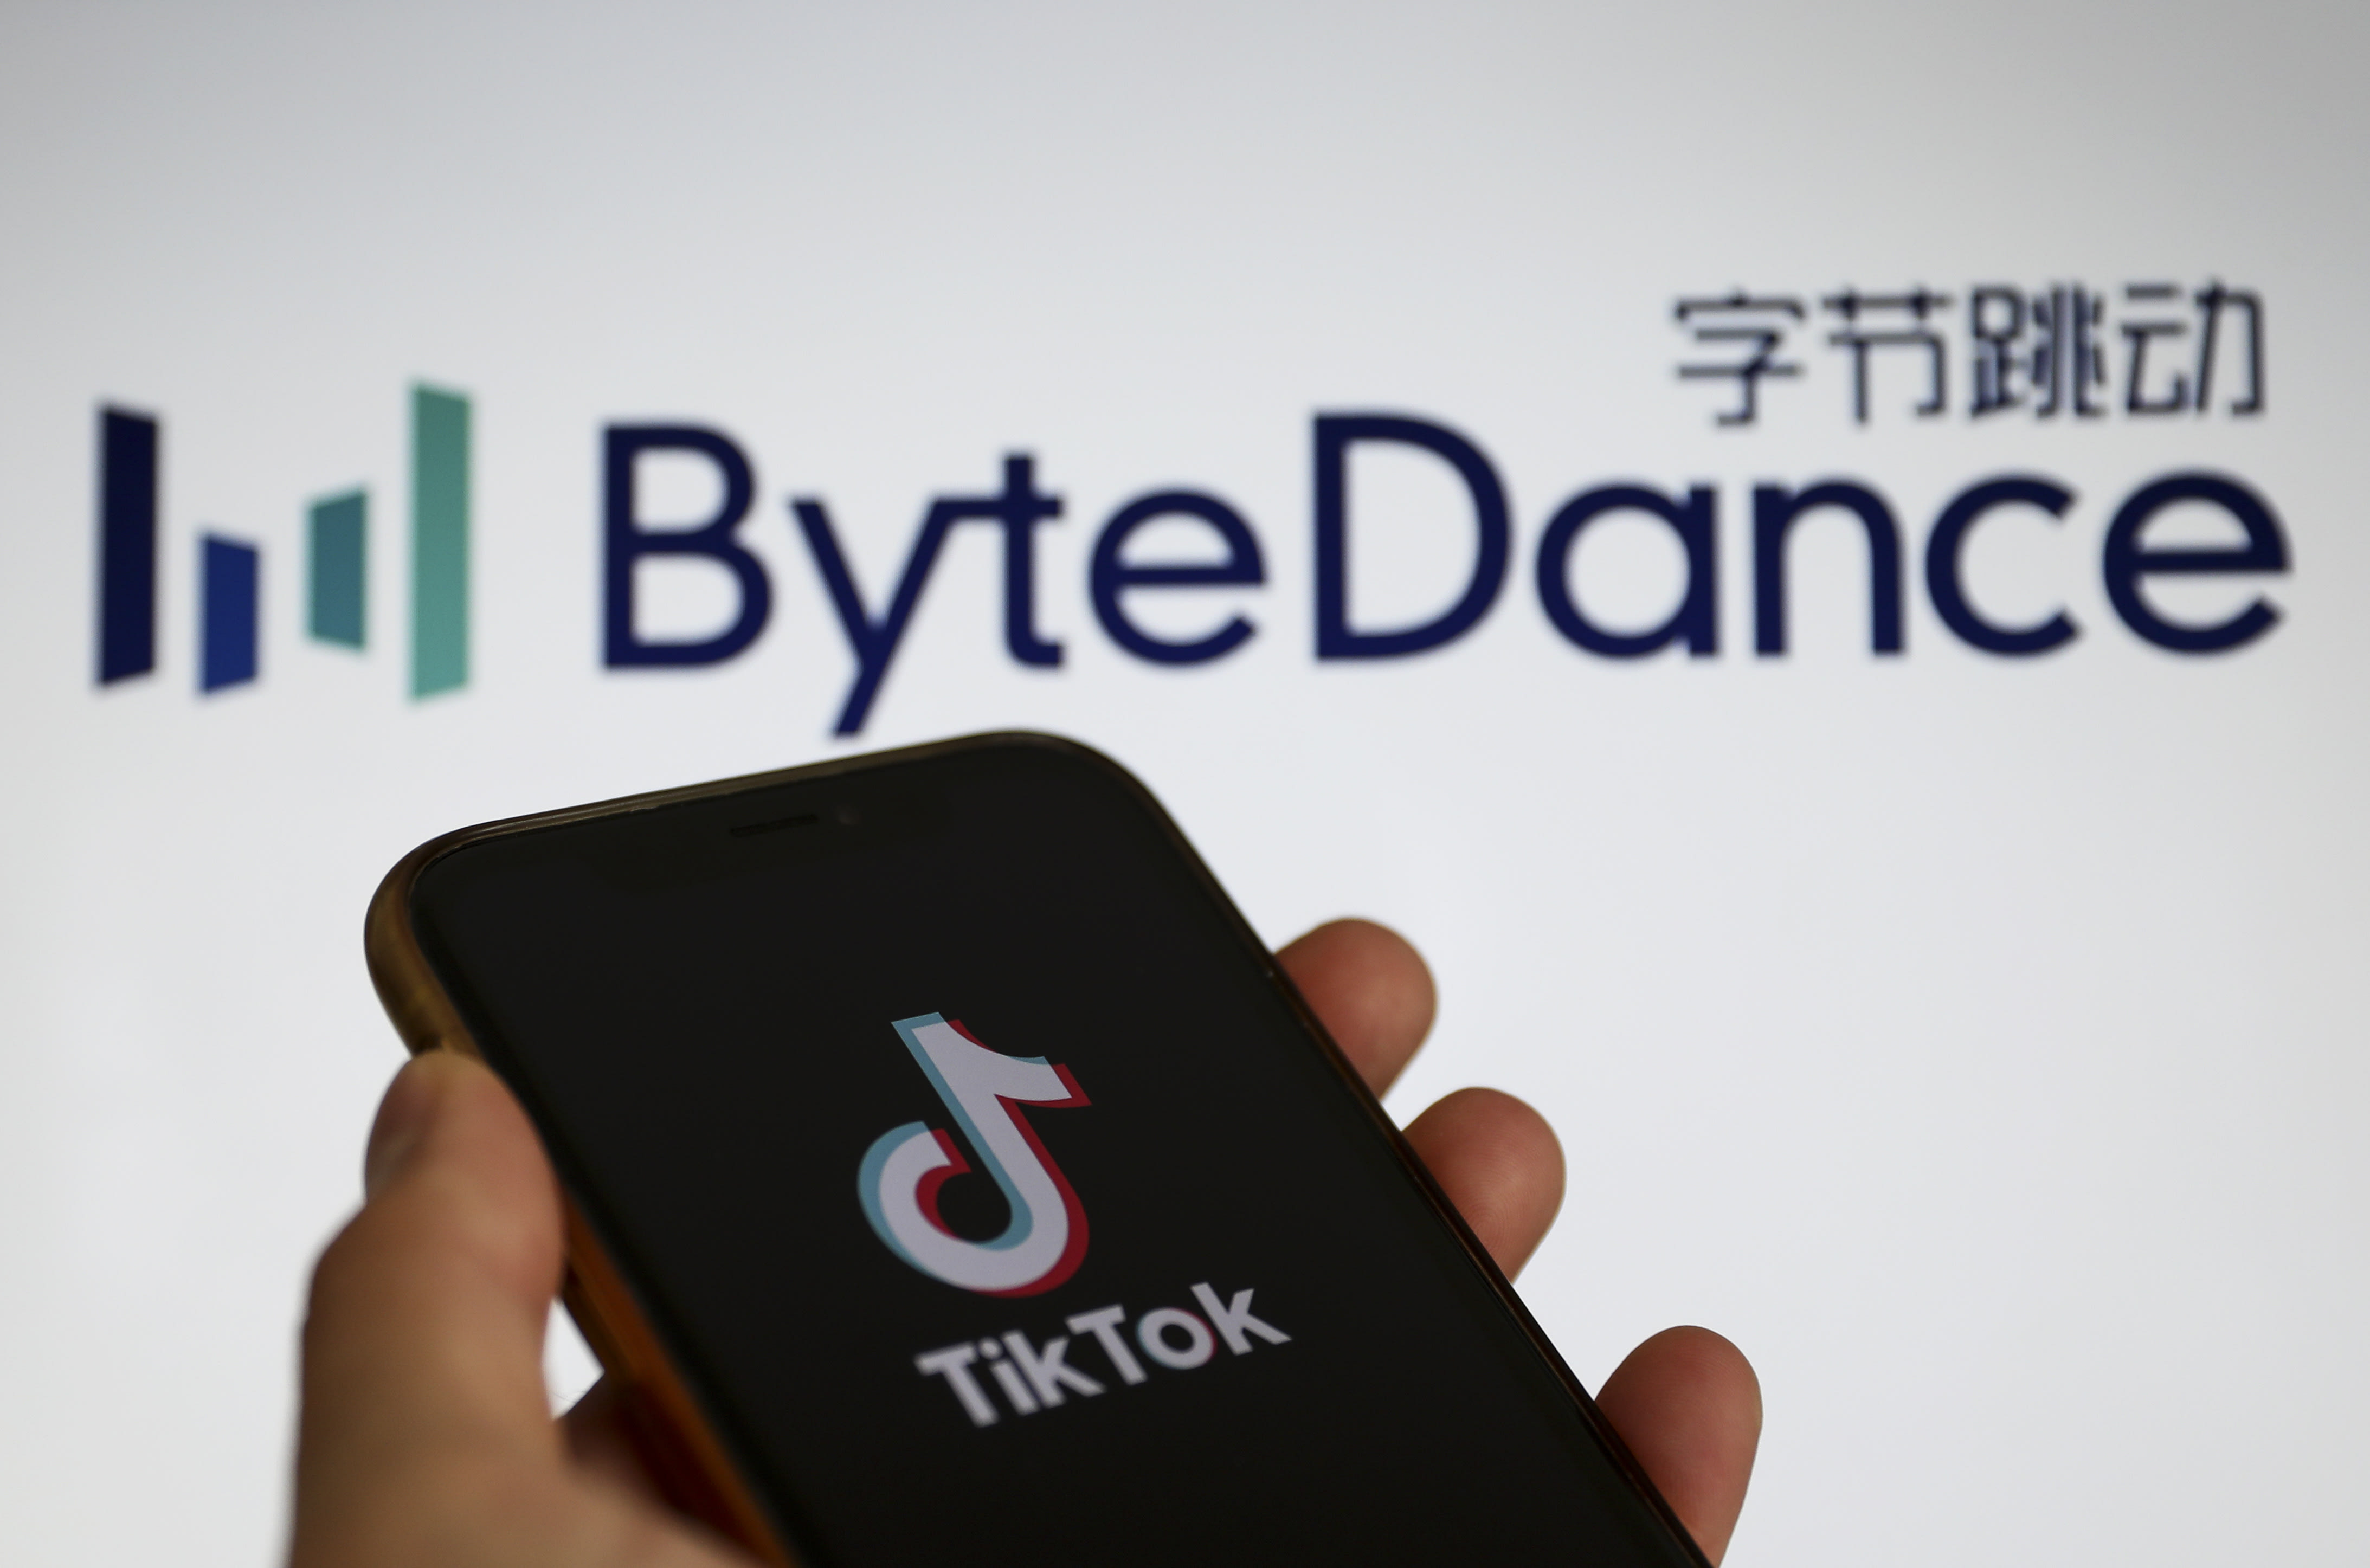 TikTok transparency report shows it removed 49 million videos